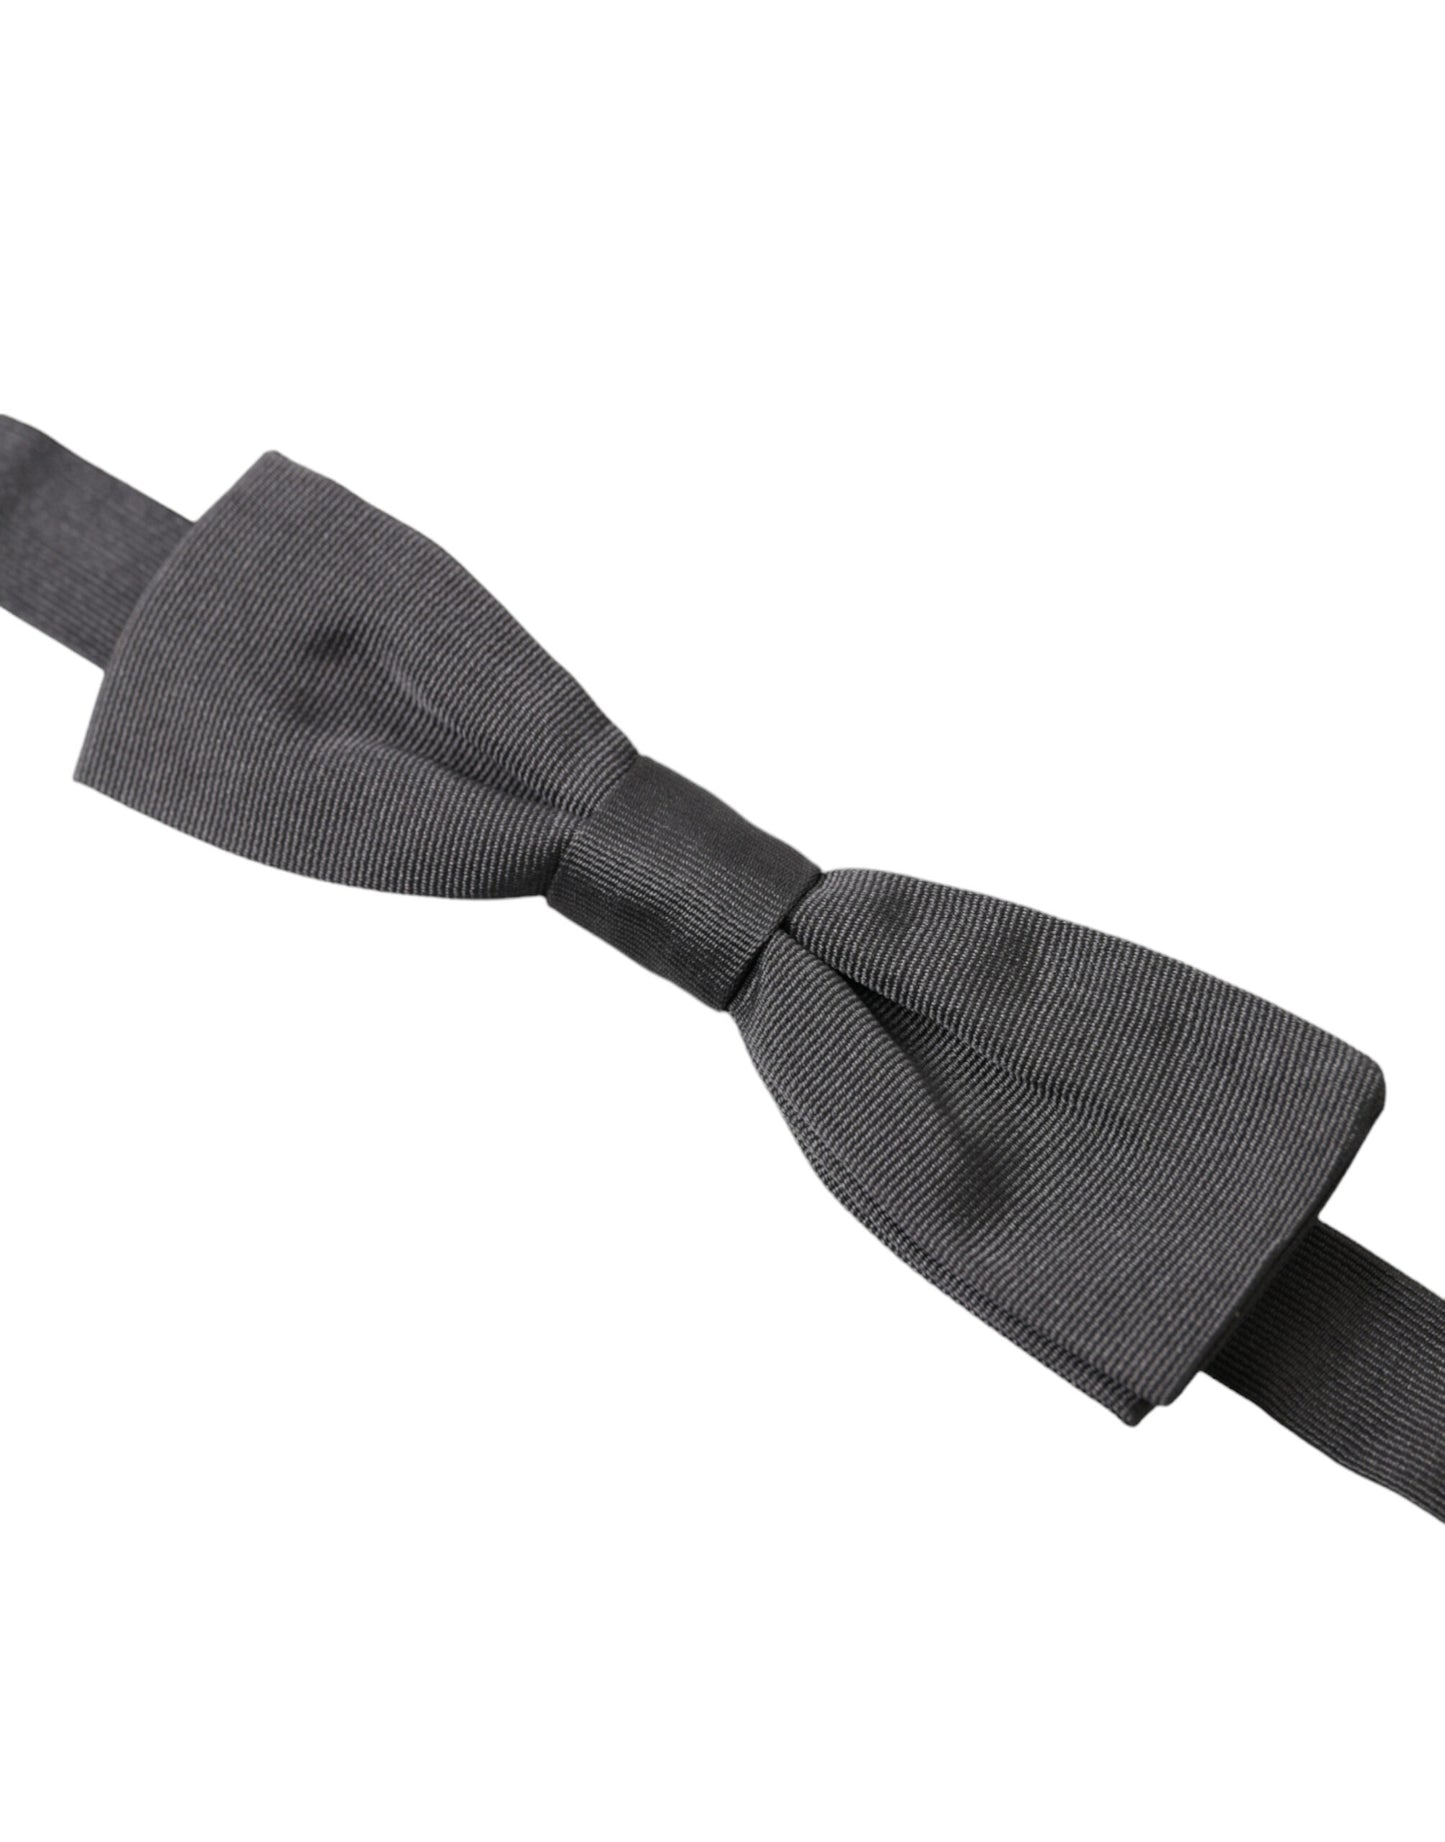 Elegant Silk Dark Gray Bow Tie